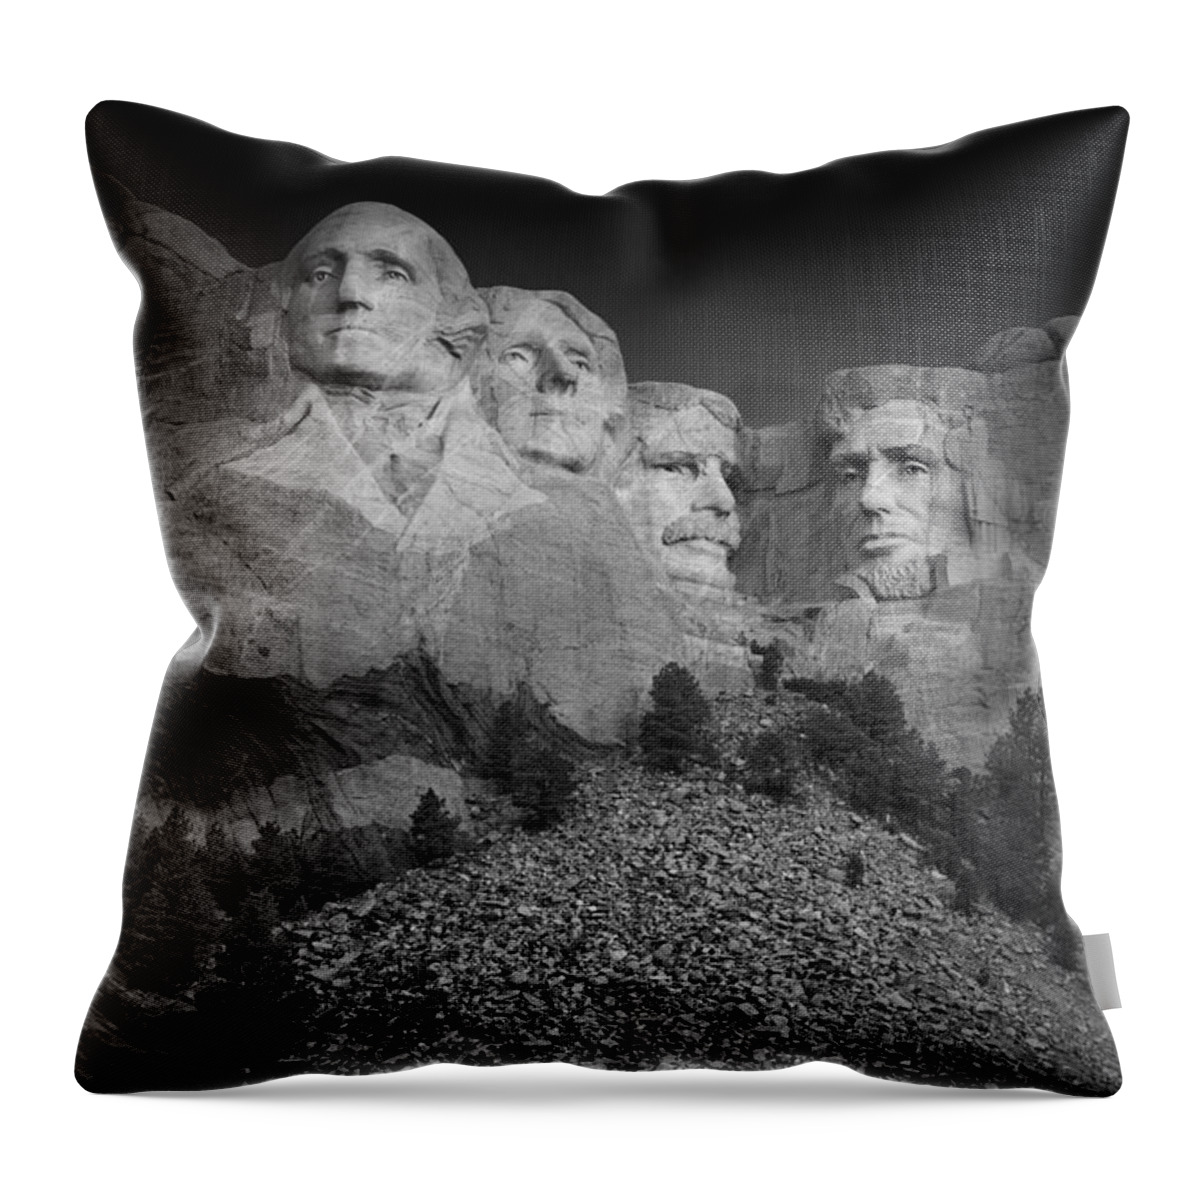 Mount Throw Pillow featuring the photograph Mount Rushmore South Dakota Dawn B W by Steve Gadomski